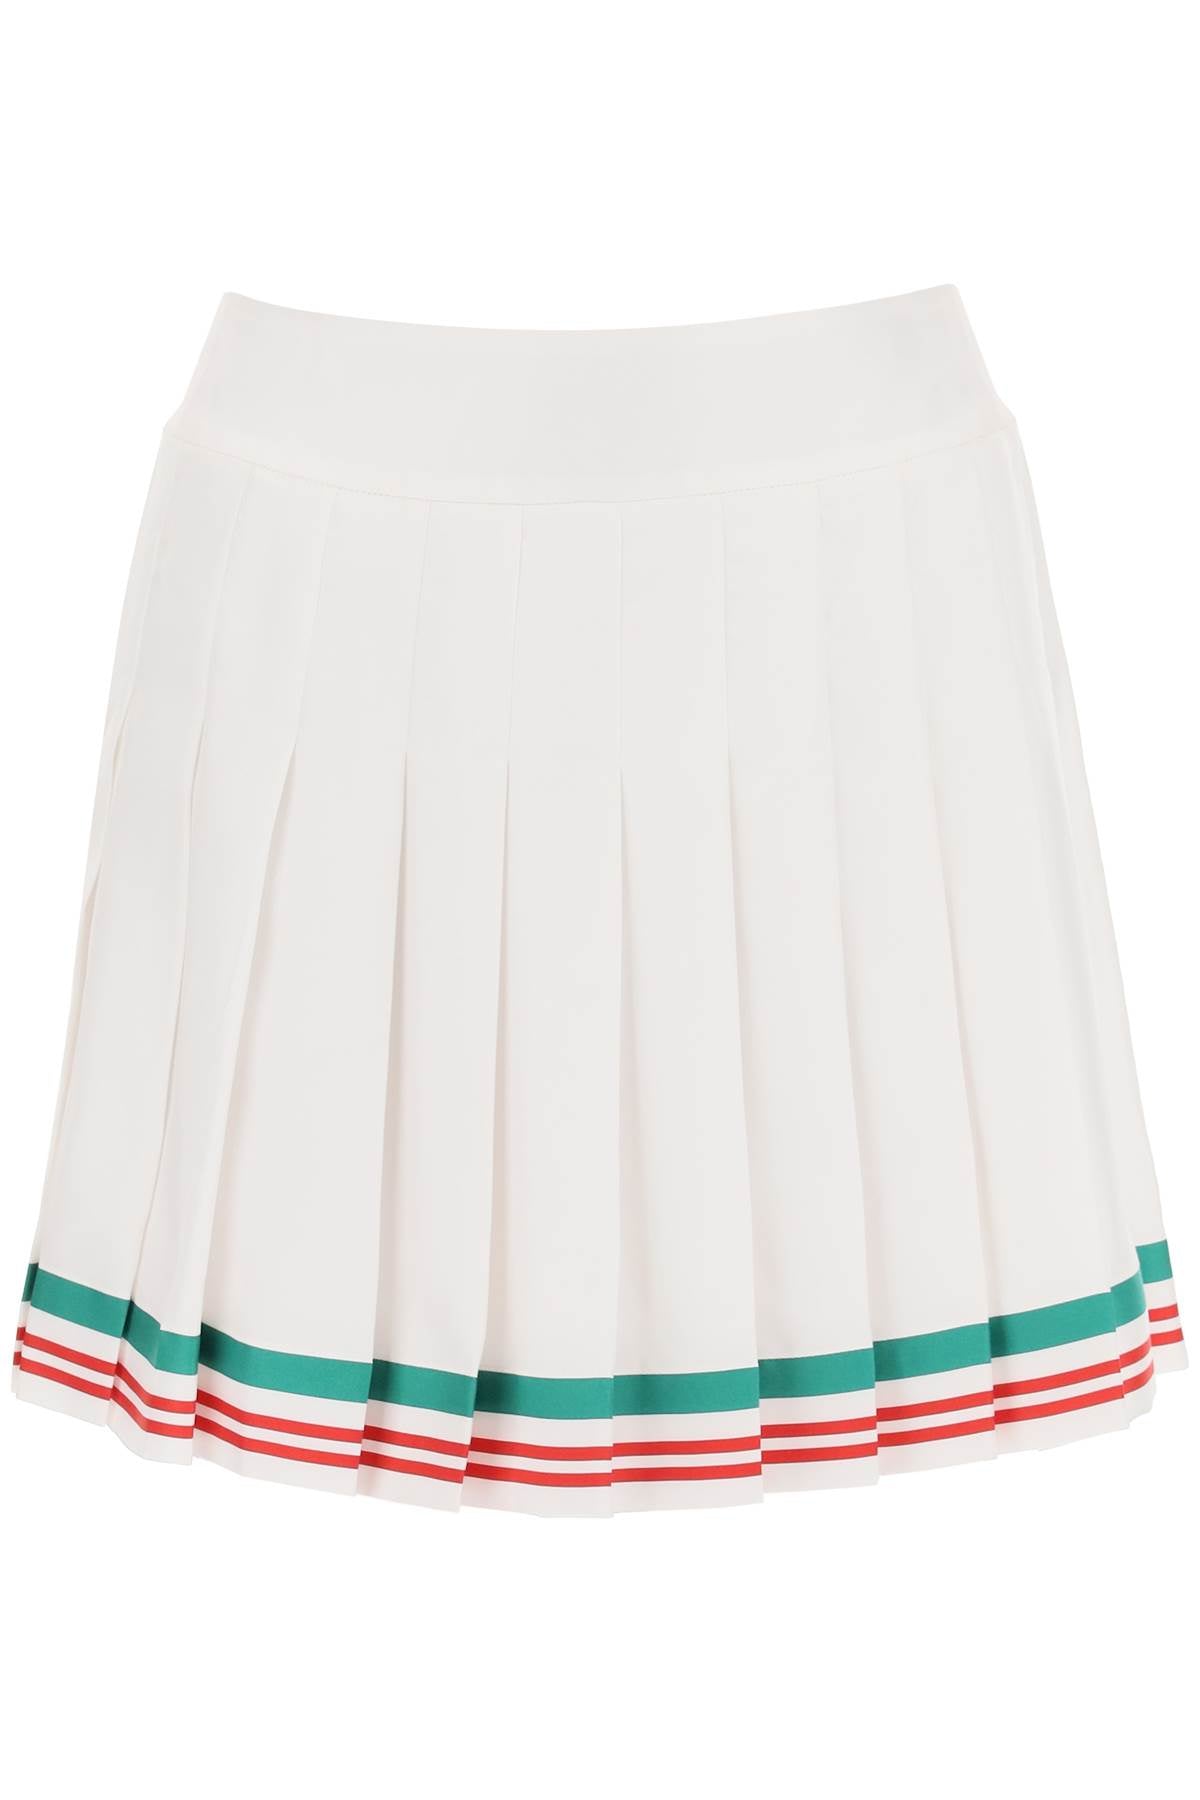 Casablanca casaway tennis mini skirt-0